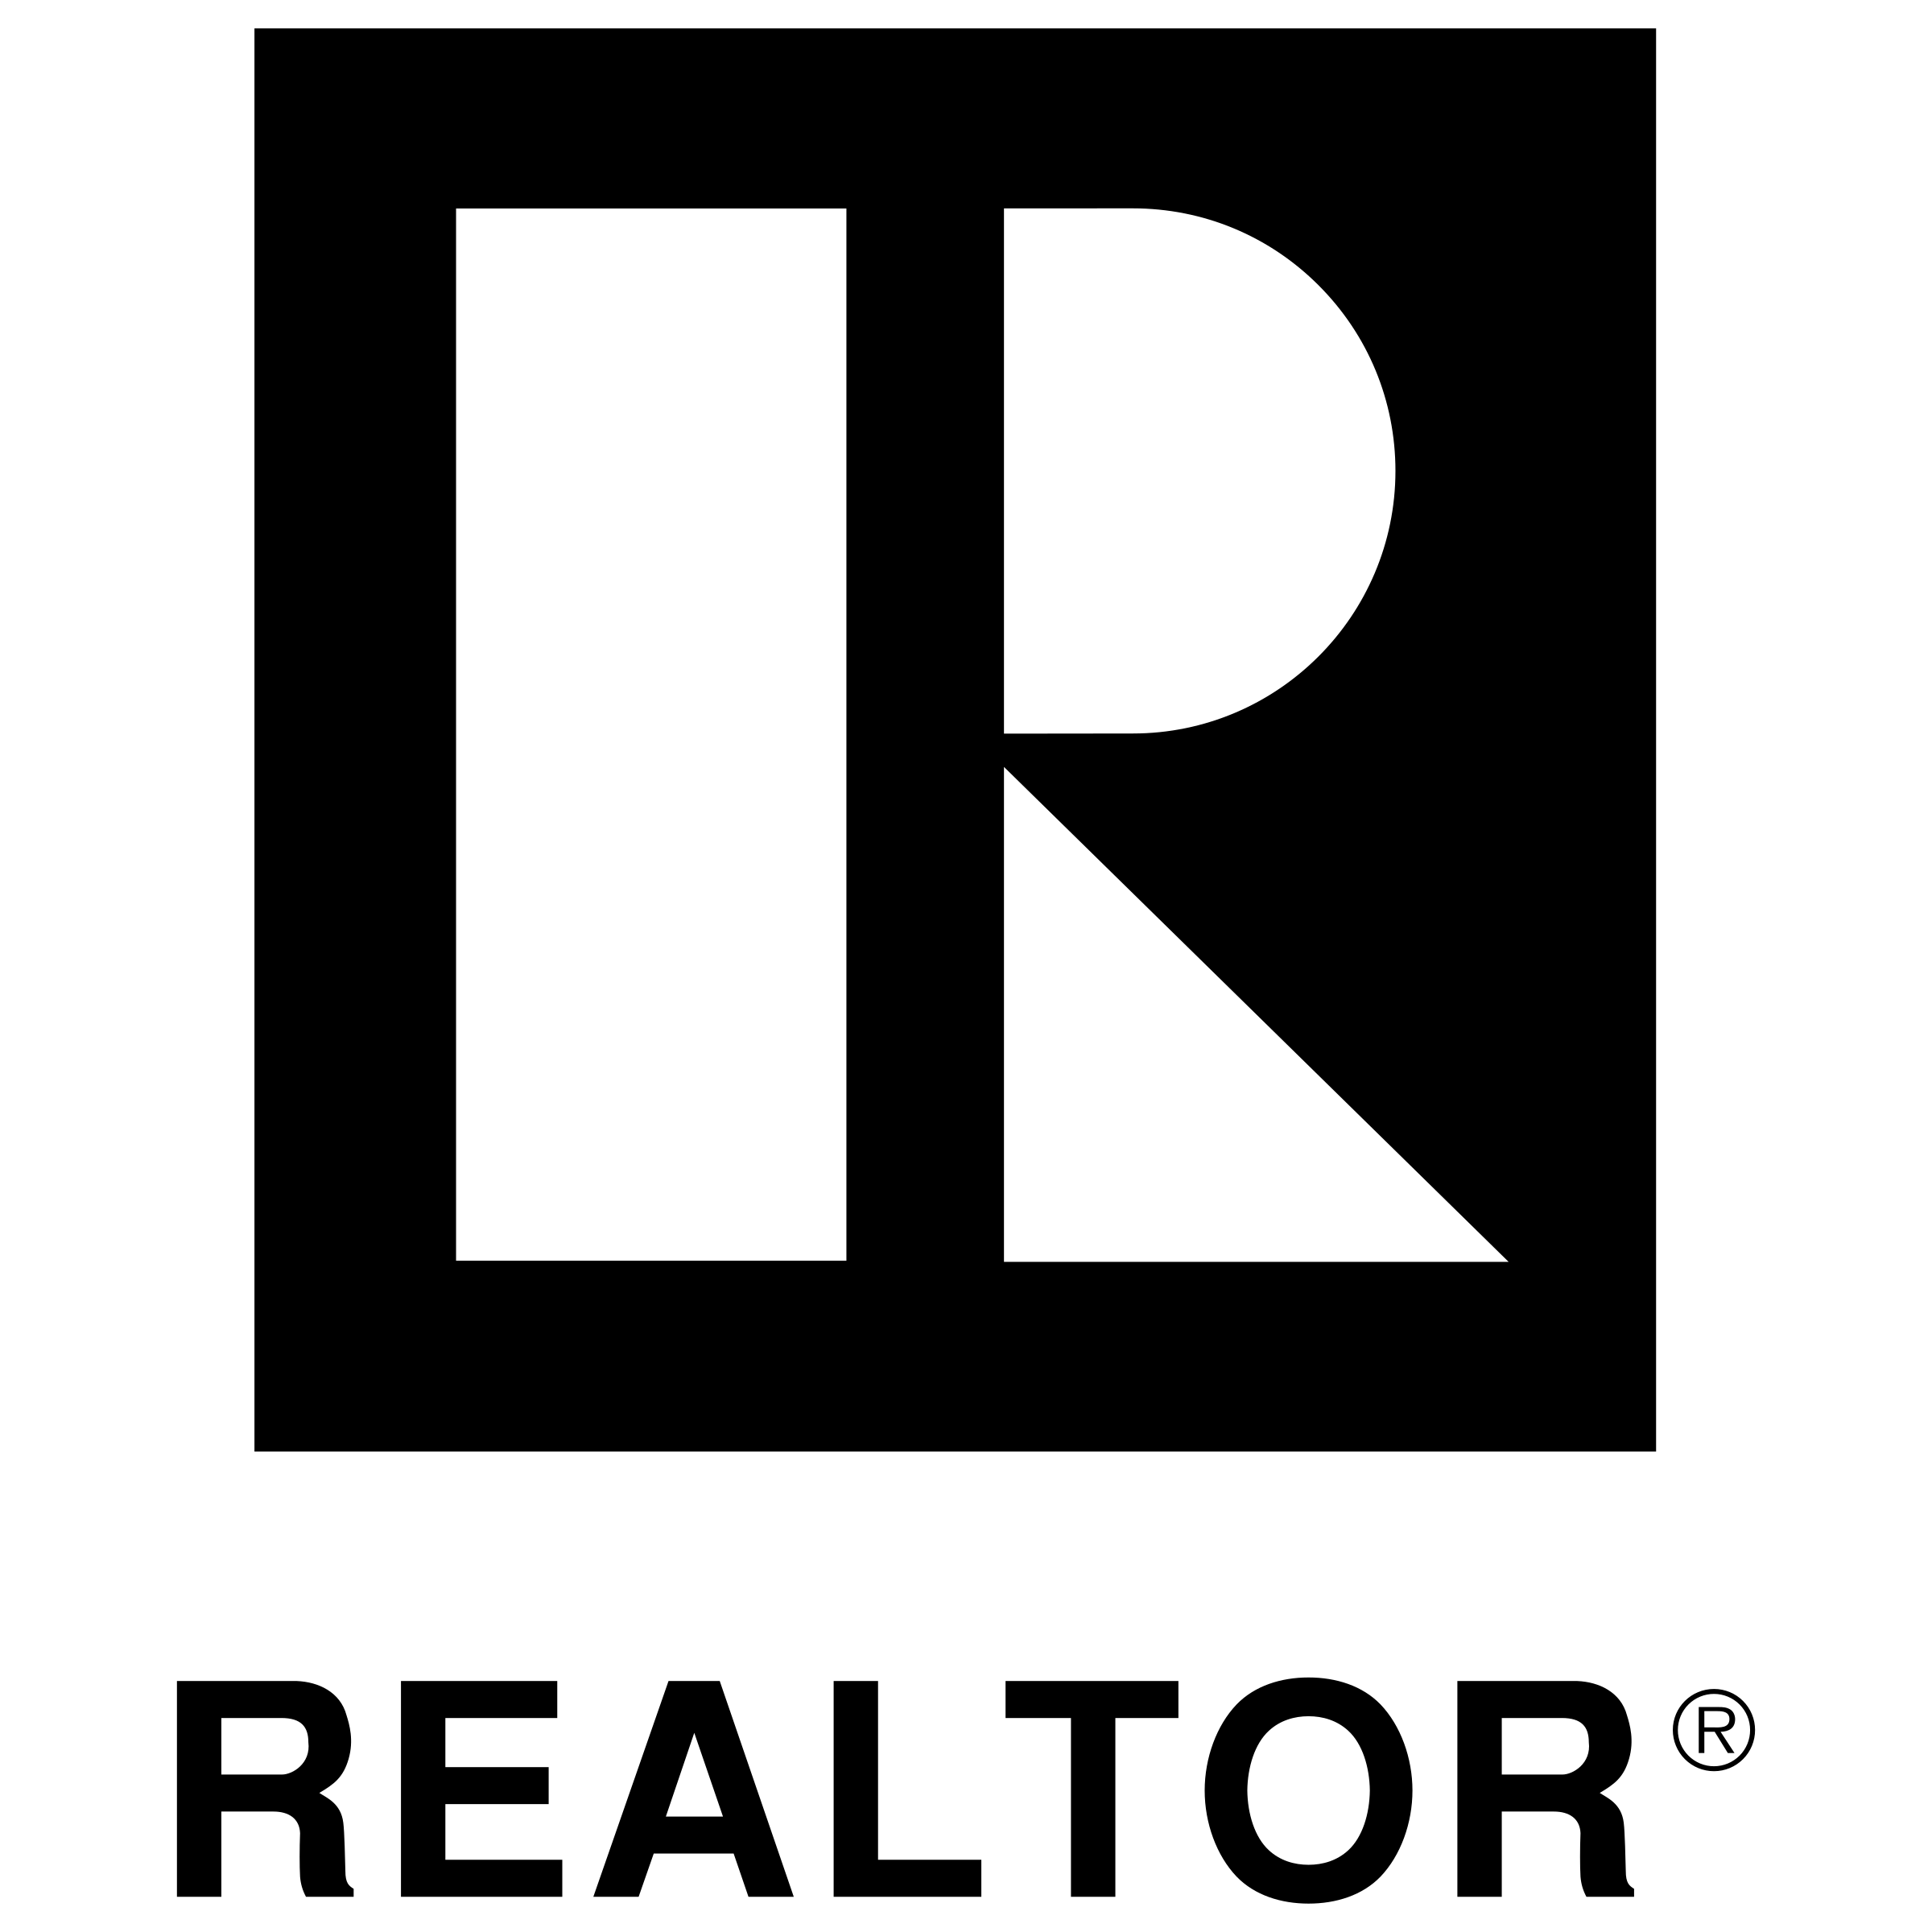 Realtor R Logo - Realtor Logo PNG Transparent & SVG Vector - Freebie Supply